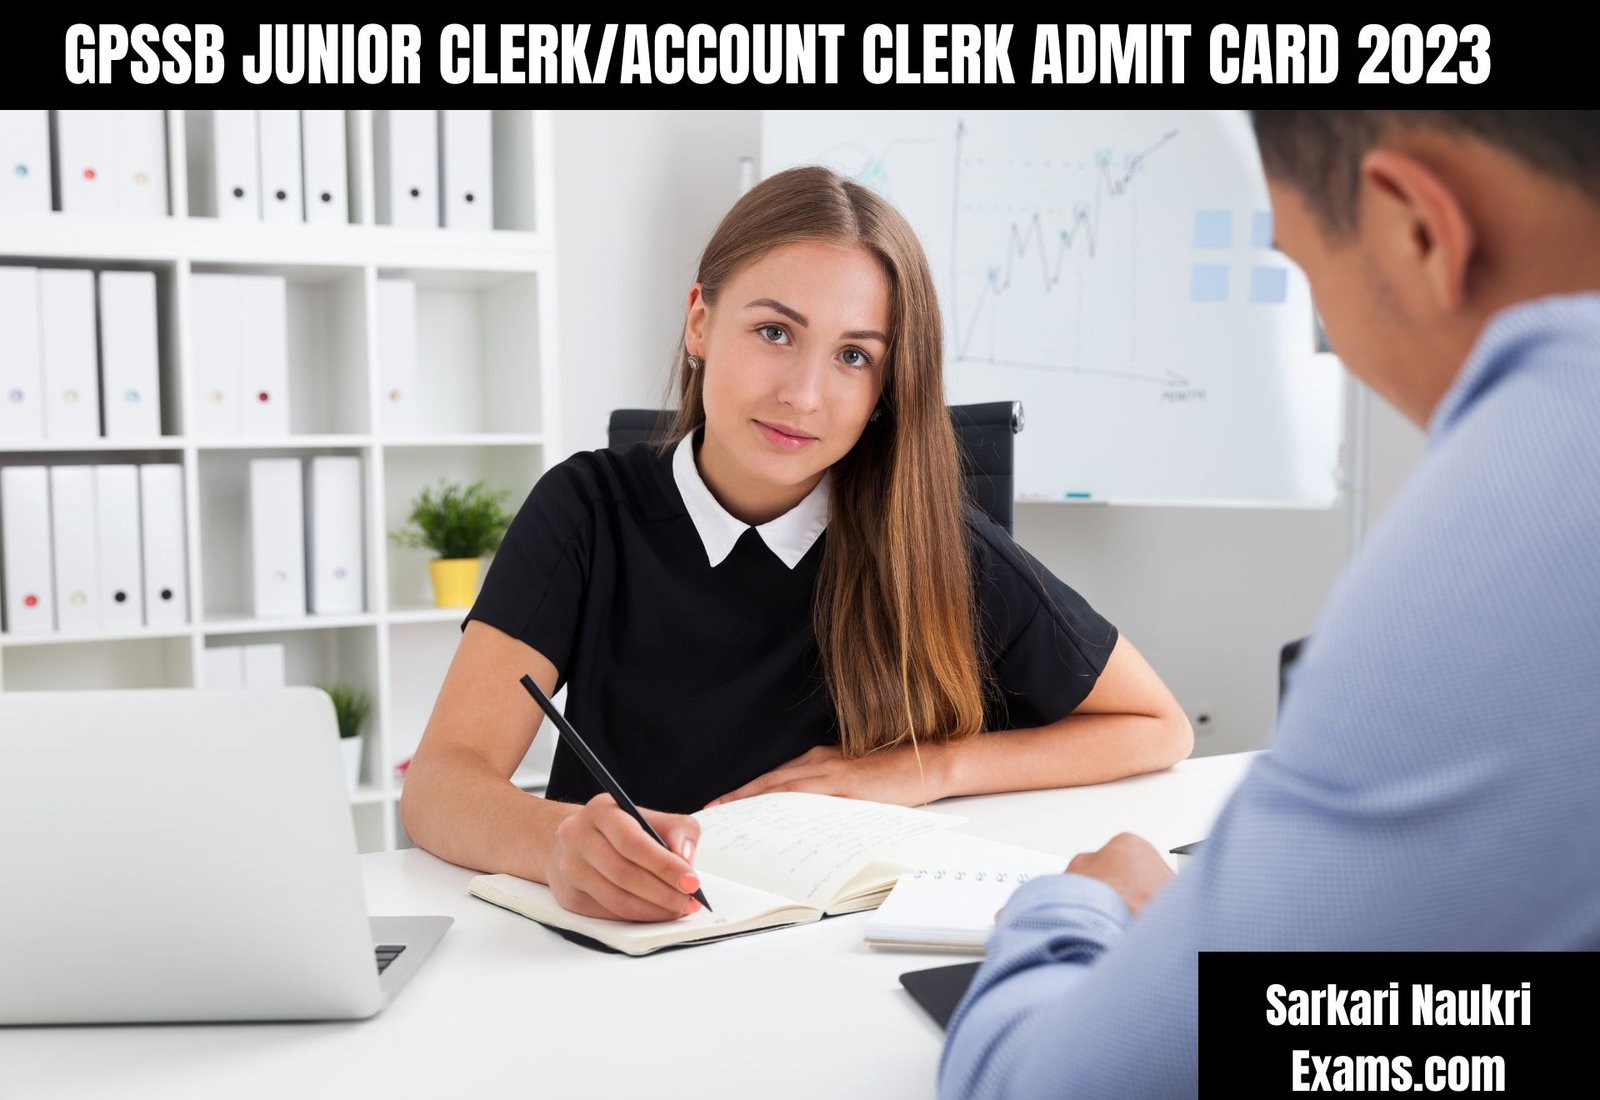 GPSSB Junior Clerk/Account Clerk Admit Card 2023 (OUT) | Download Link, Exam Date